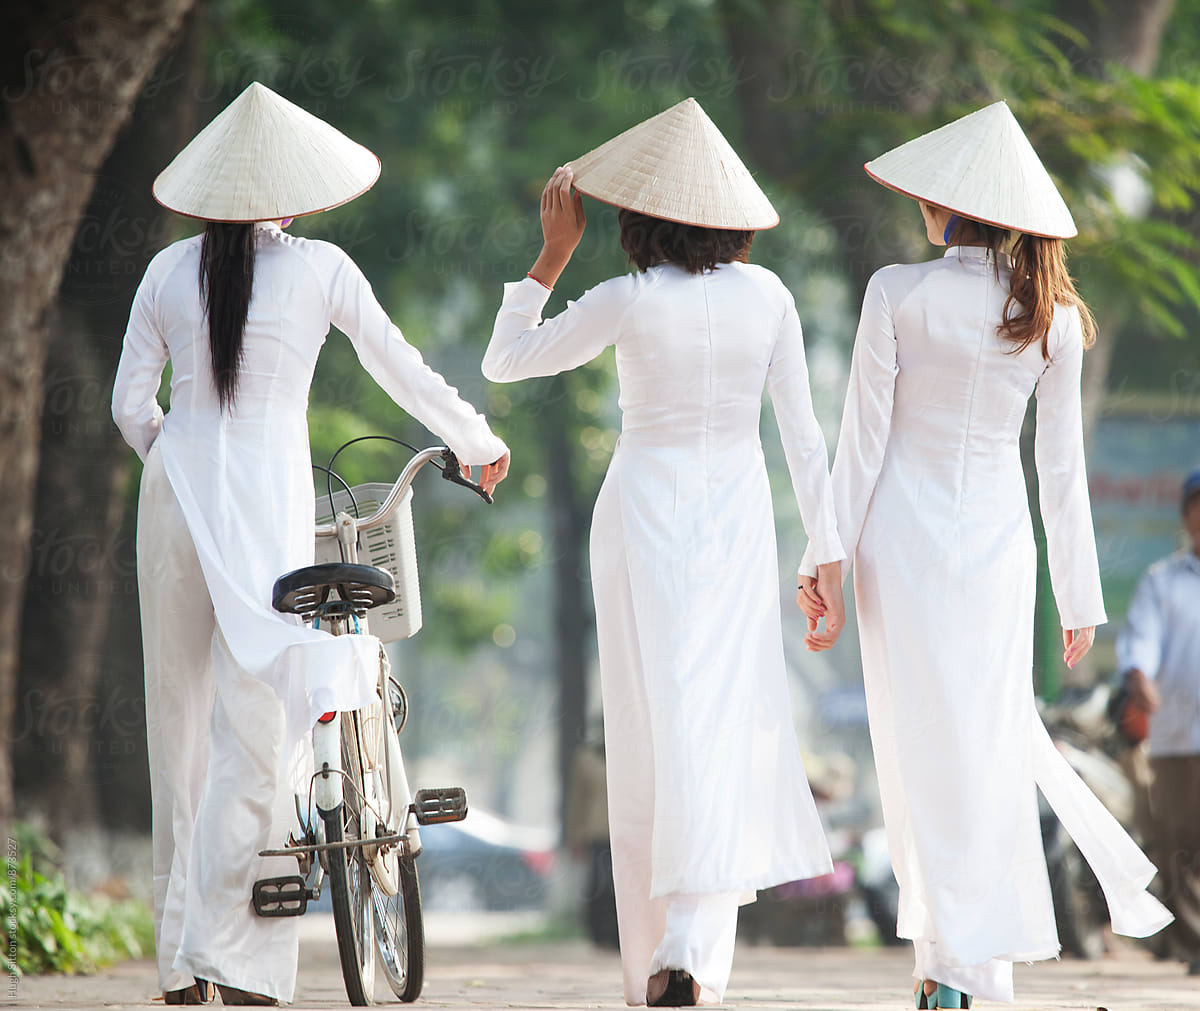 traditional vietnamese women